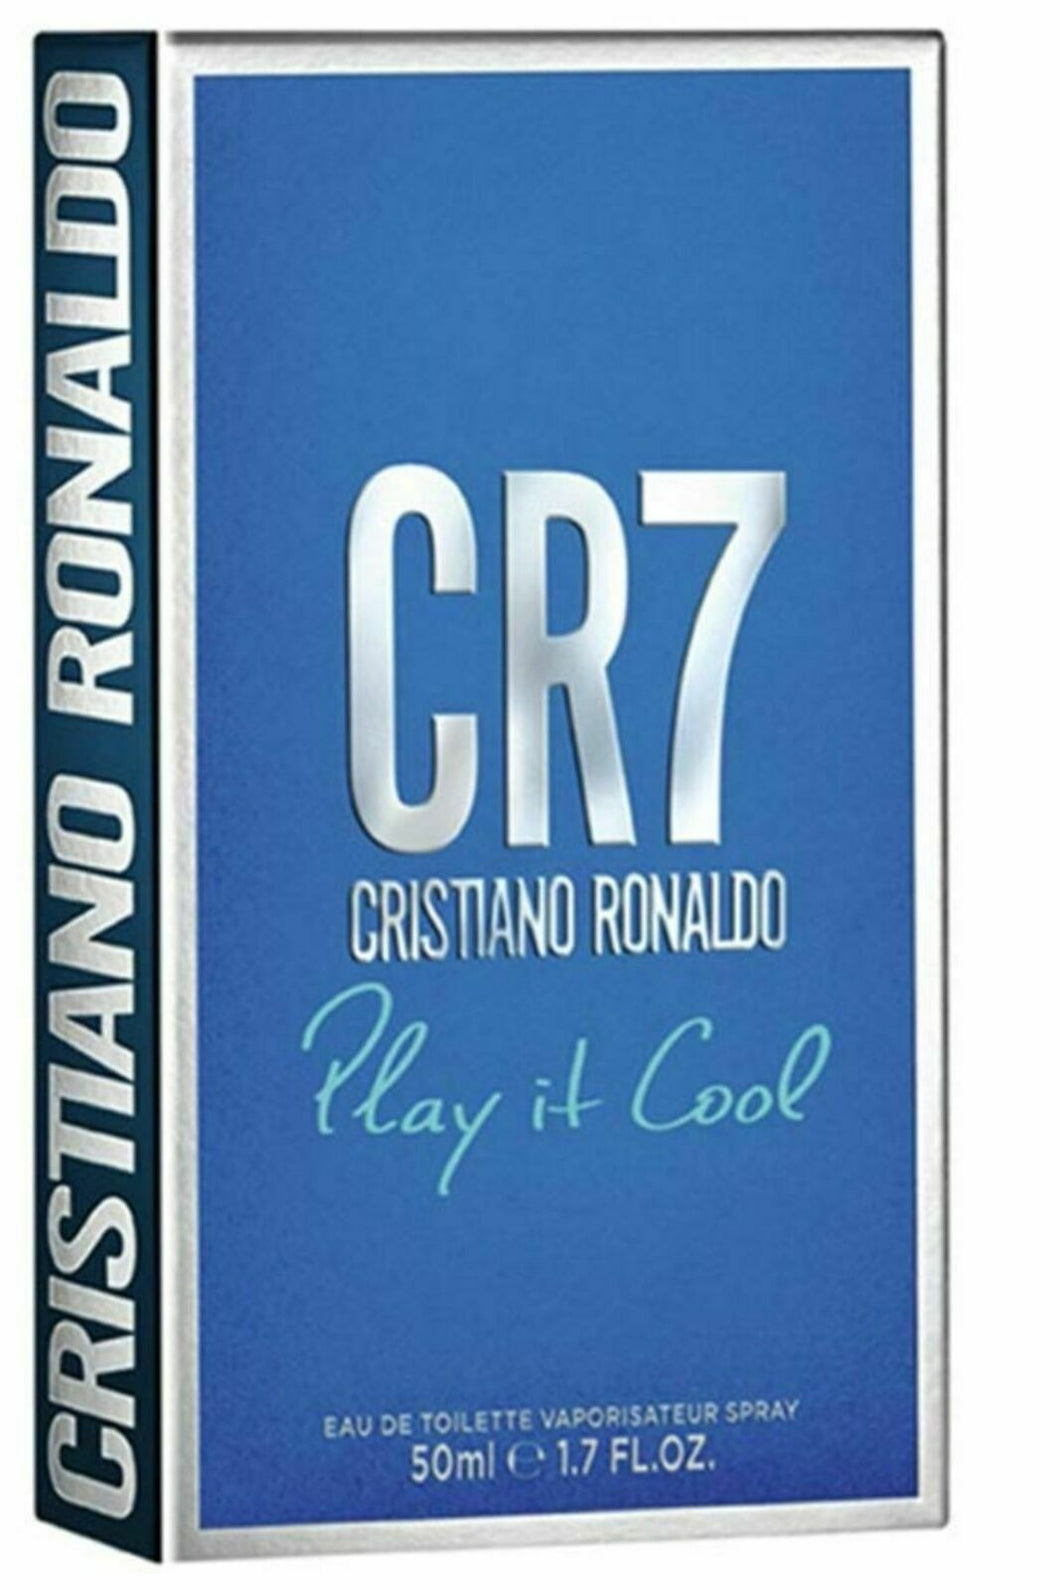 CR7 Play it Cool Cristiano Ronaldo EDT Eau de Toilette Spray 50ml Mens